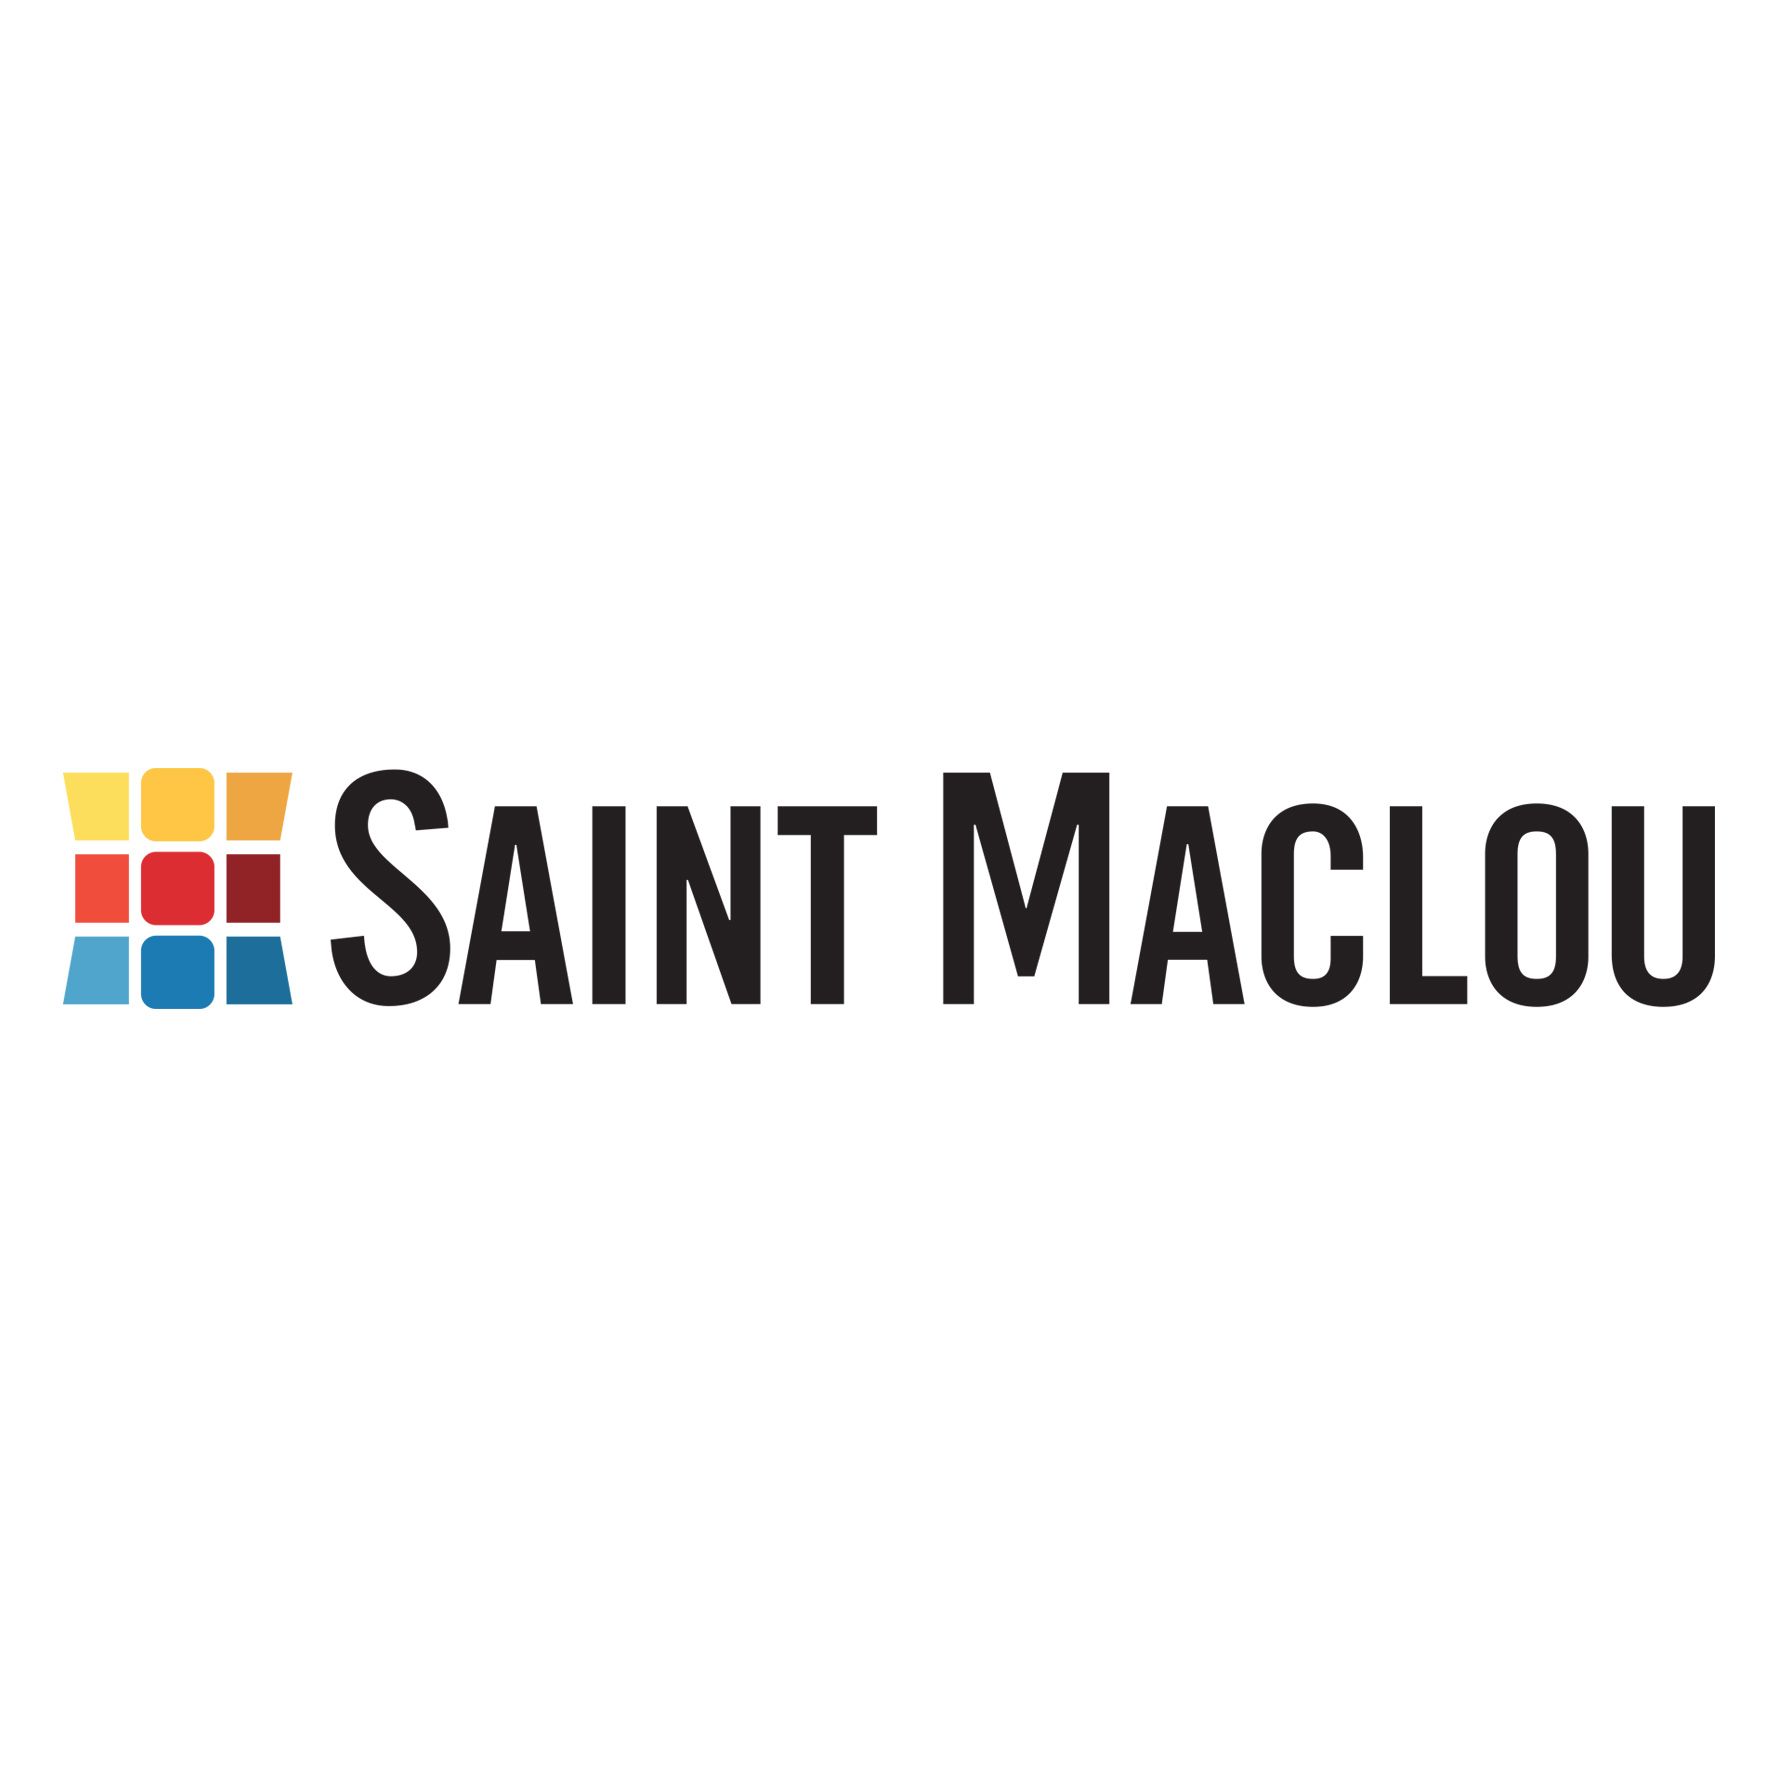 Advertising Radio Saint Maclou by Thierry Legrand